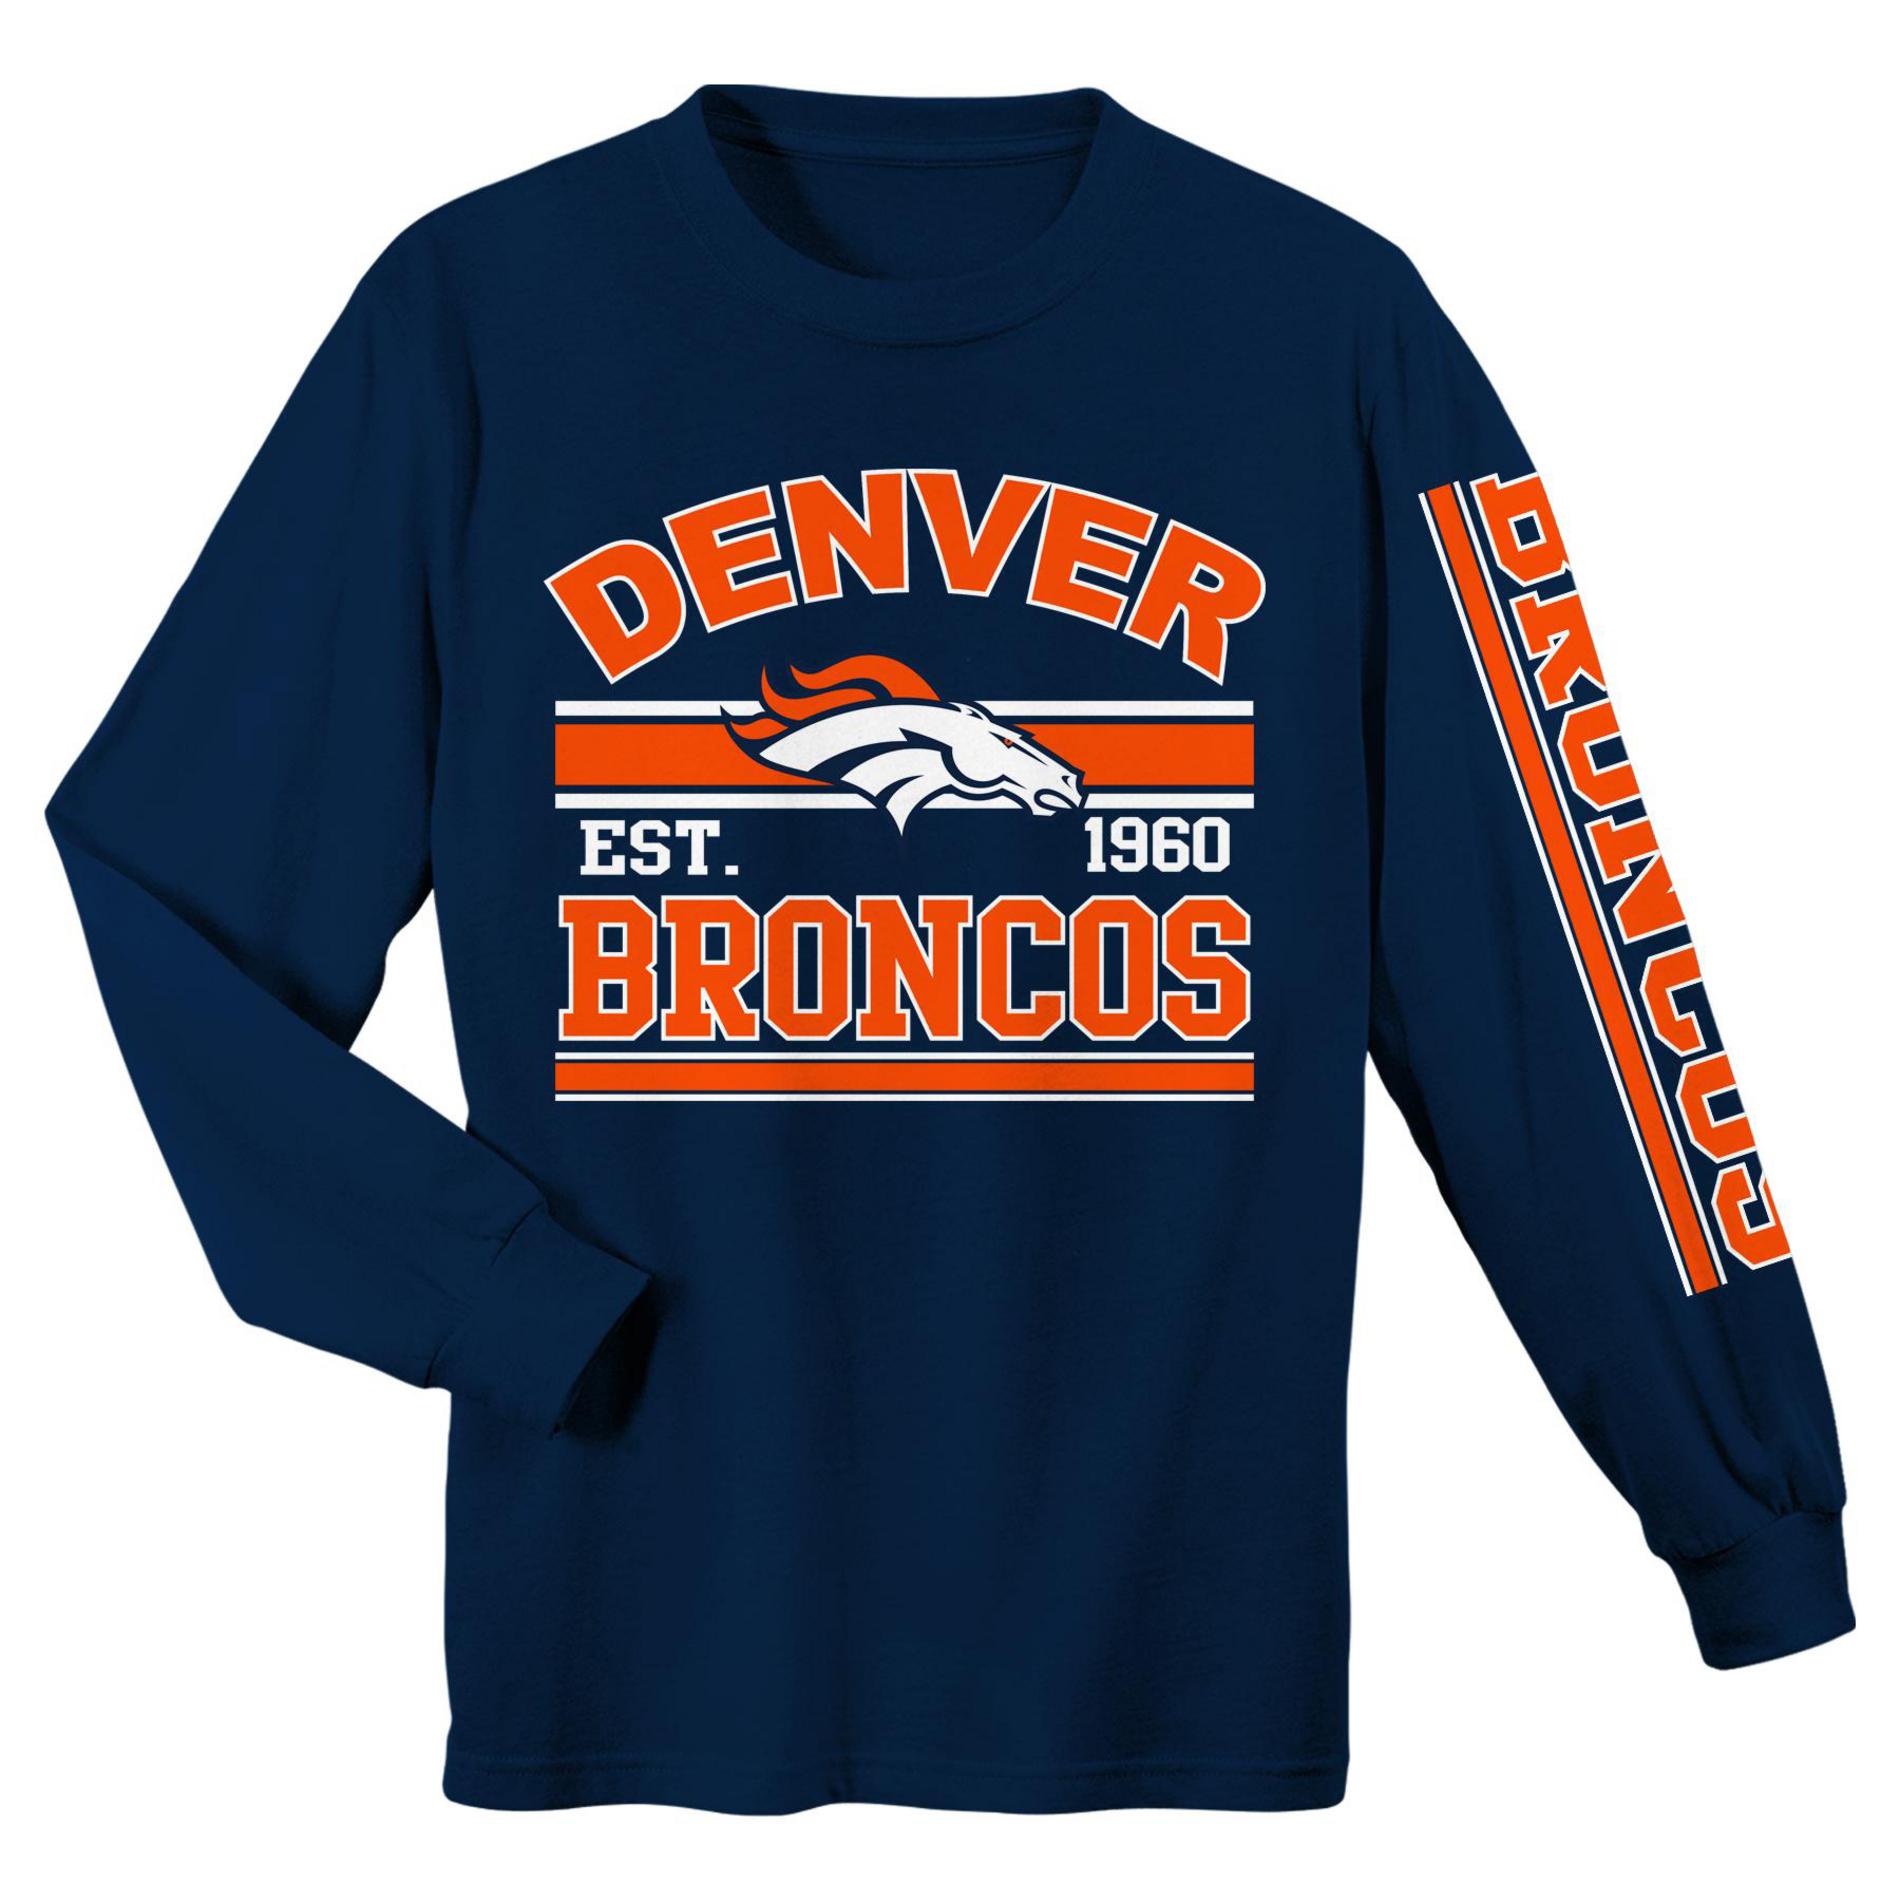 NFL Boys' Long-Sleeve Graphic T-Shirt - Denver Broncos